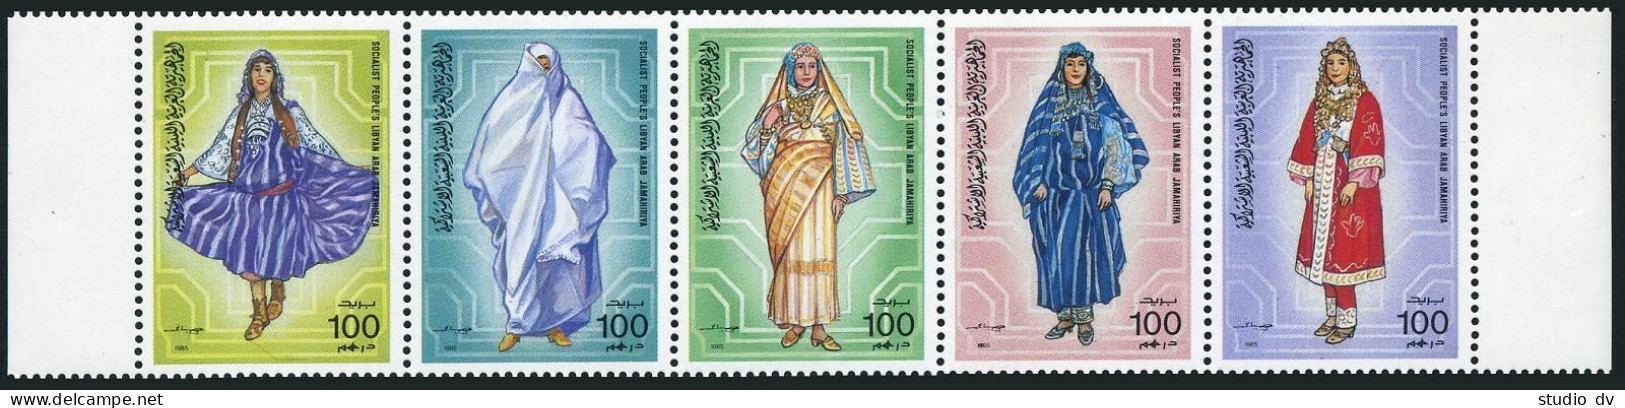 Libya 1269 Ae Strip,MNH.Michel 15700-1574. Women's Folk Costumes,1985. - Libya